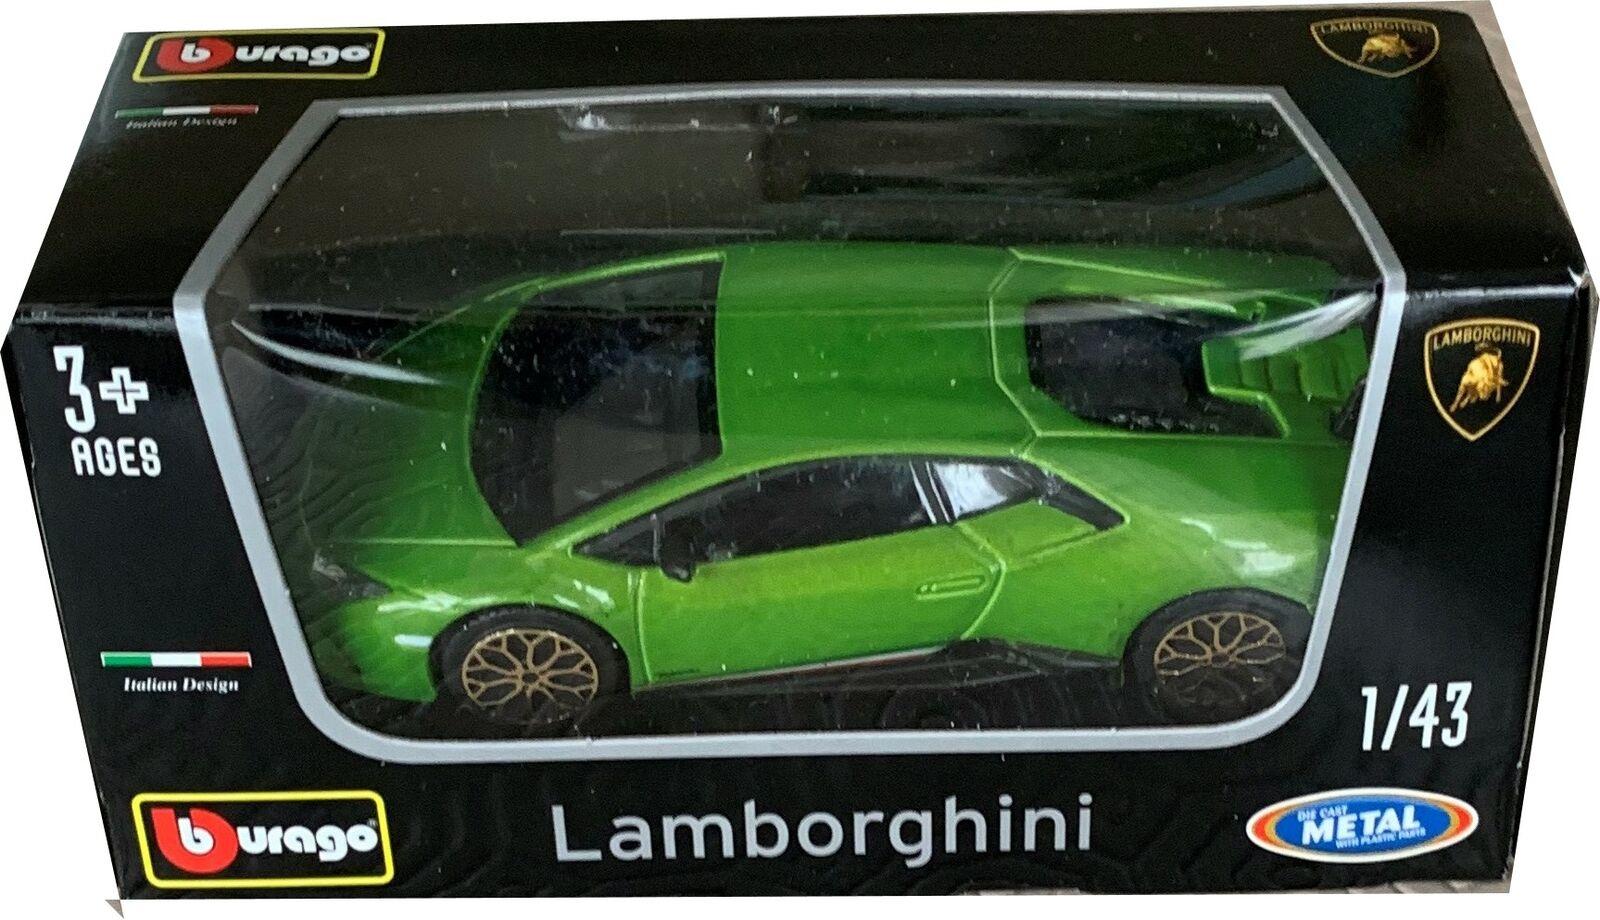 Lamborghini Huracan Performante in green 1:43 scale model, Bburago, streetfire